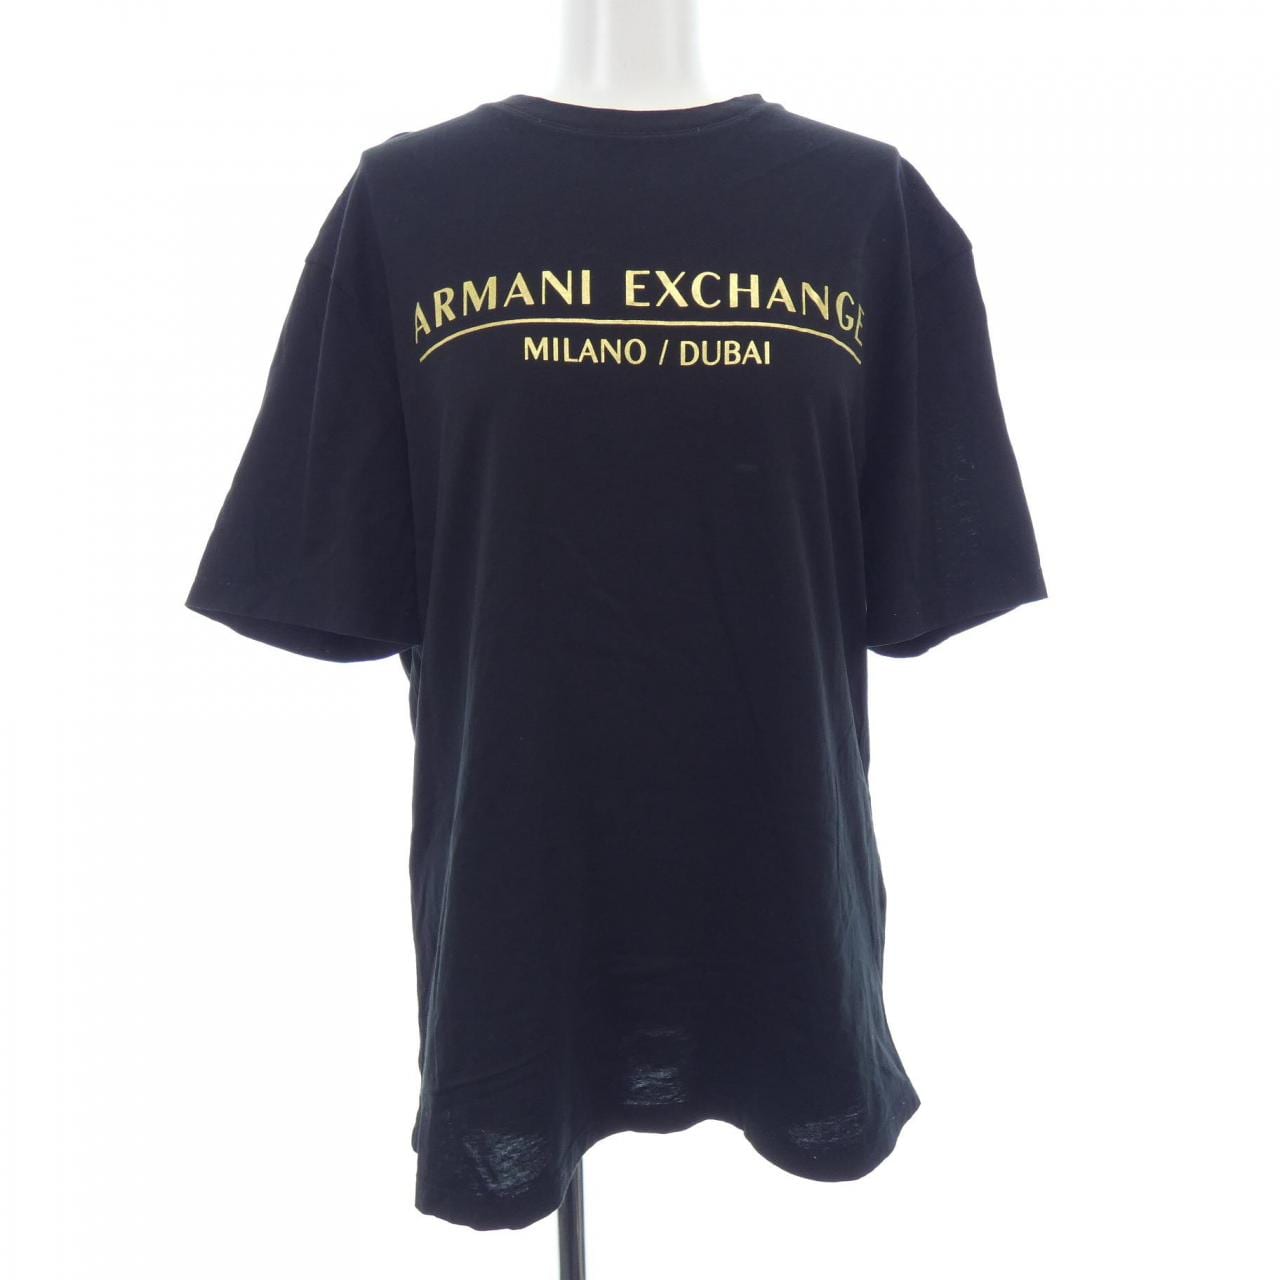 ARMANI EXCHANGE T-shirt